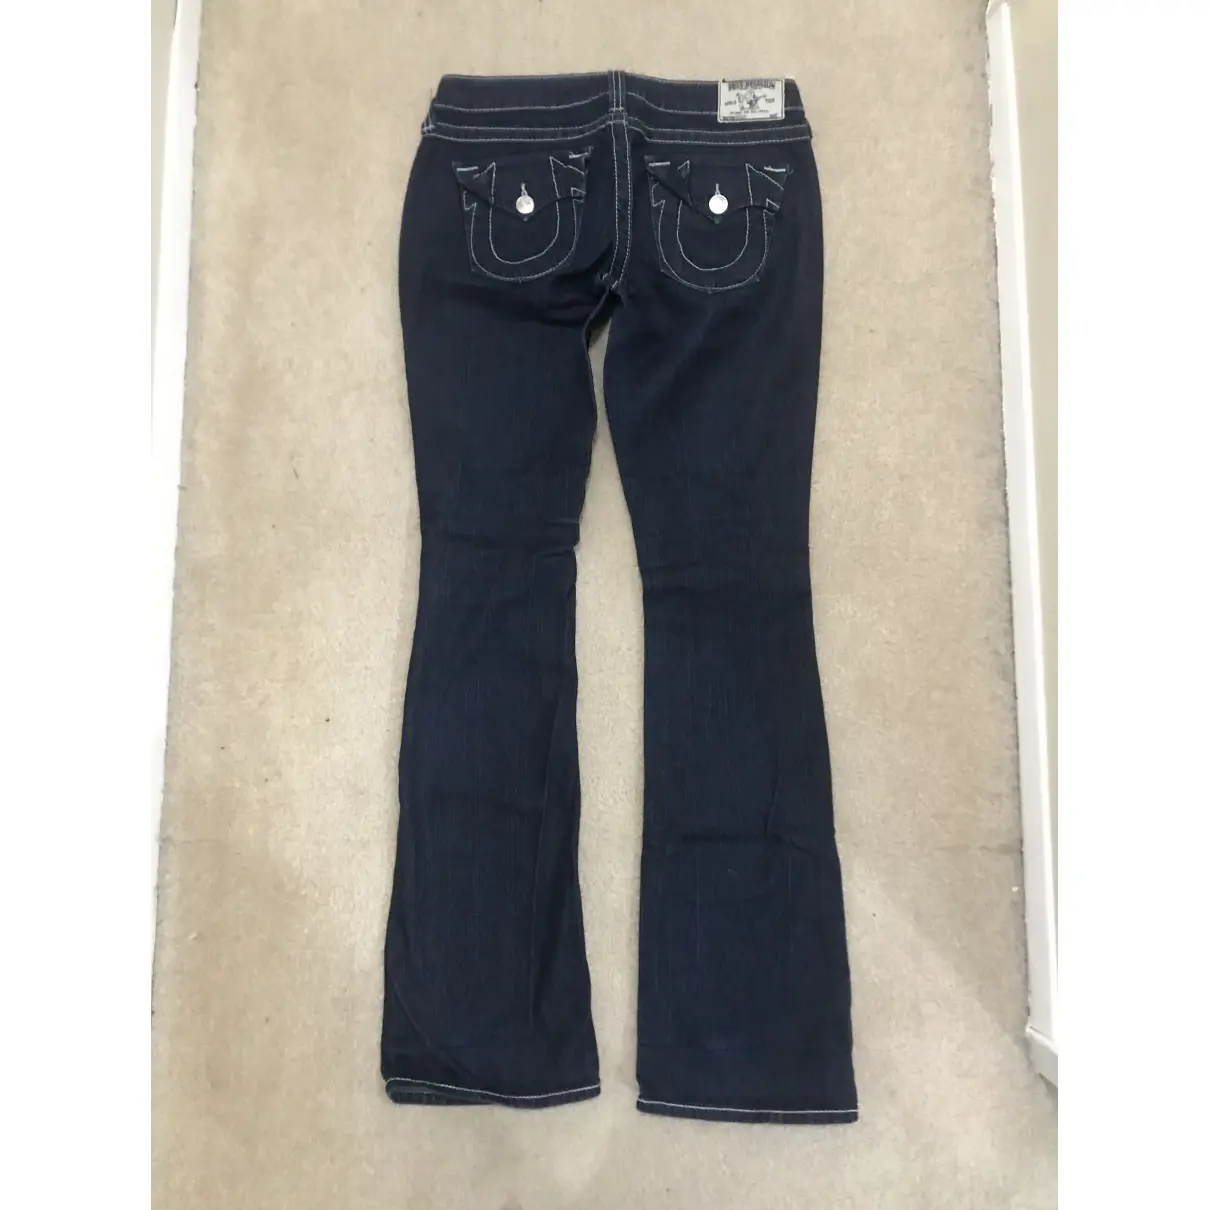 Buy True Religion Blue Denim - Jeans Jeans online